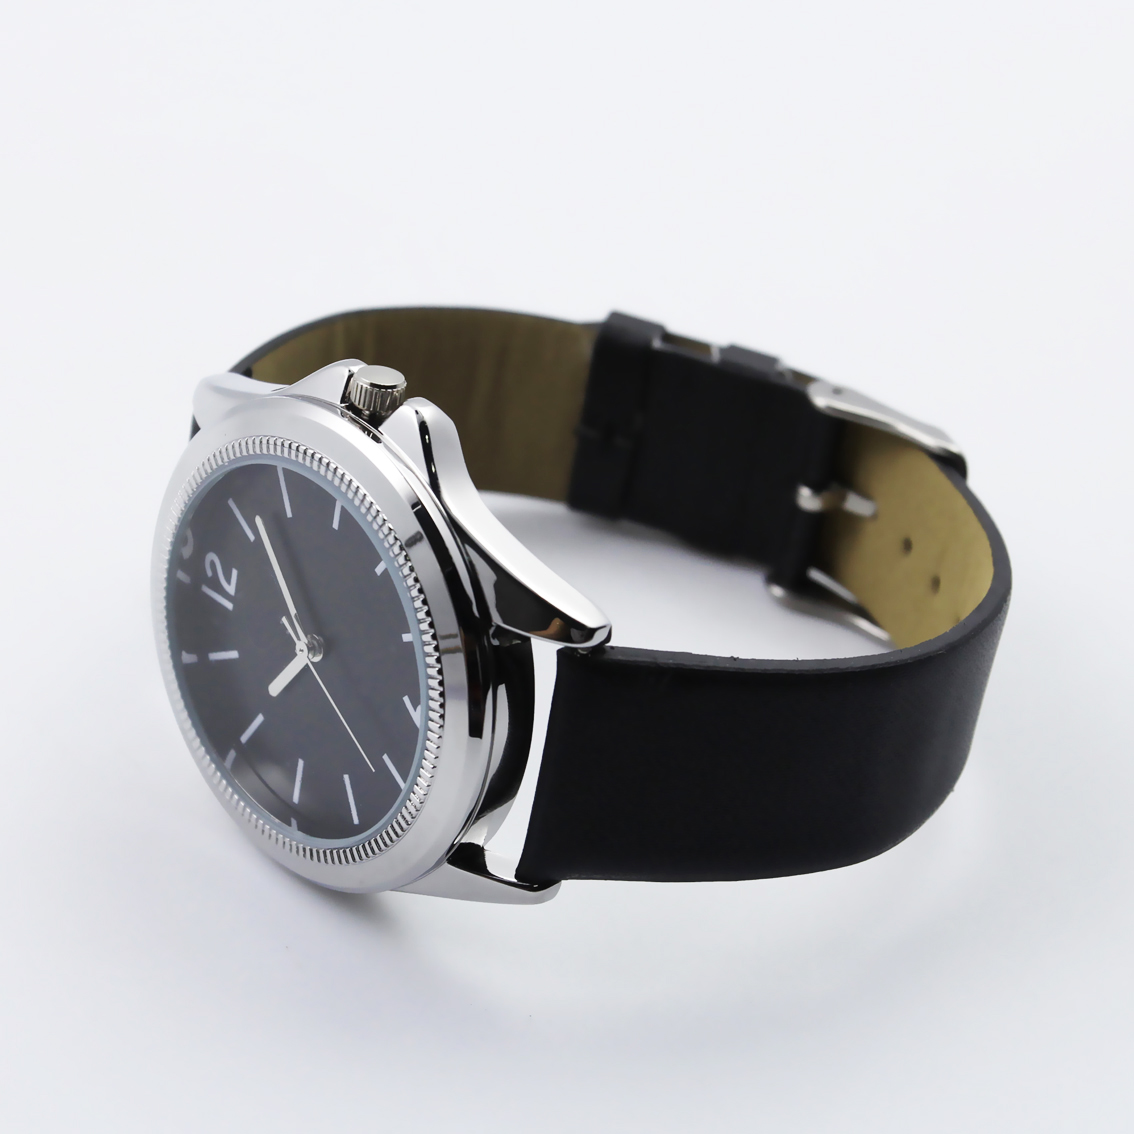 #02030Men's wristwatch quartz analog leather strap watch